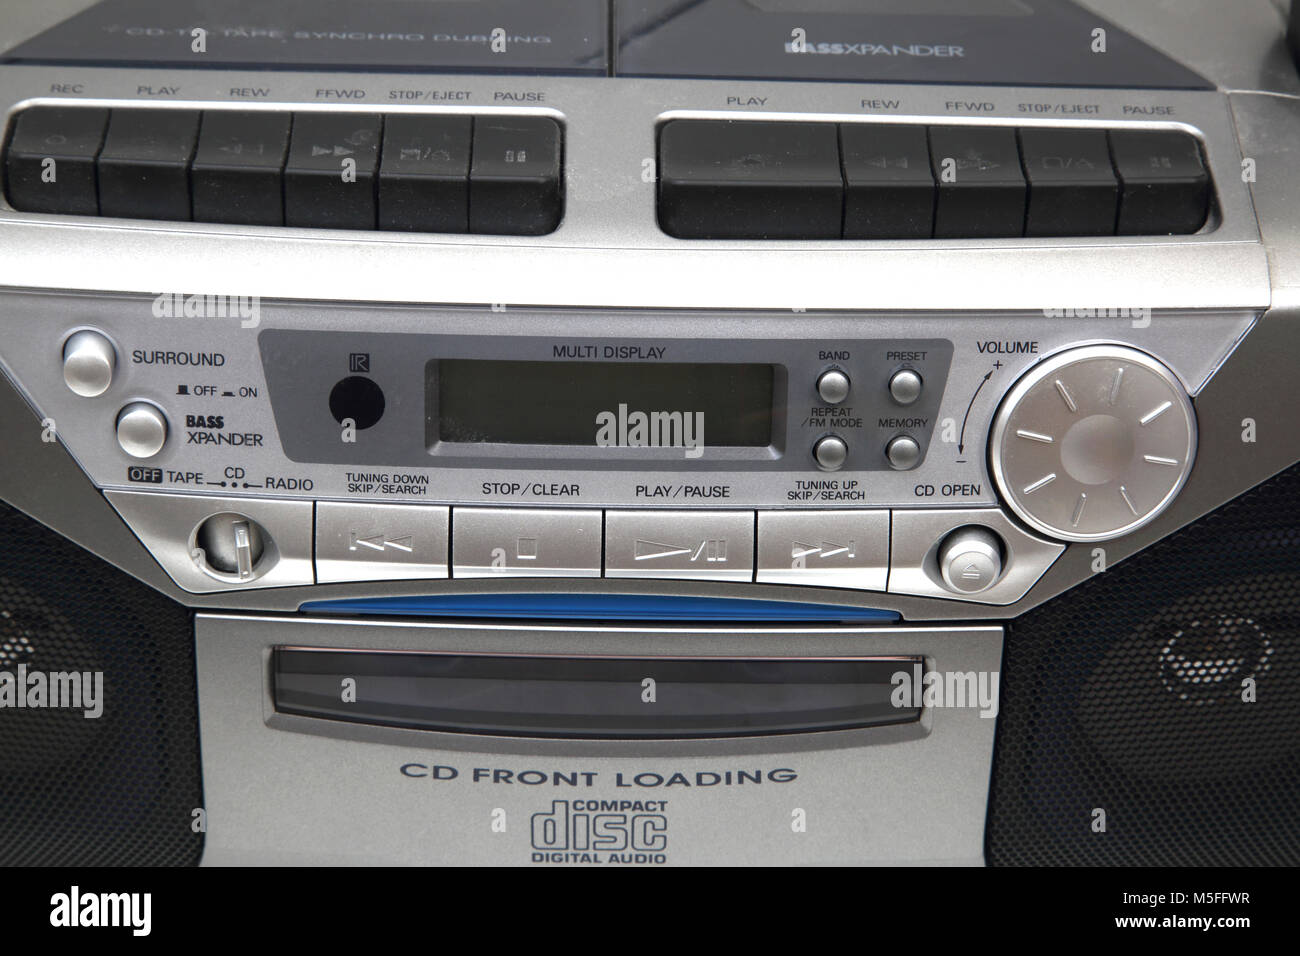 Sanyo Portable CD Radio Cassette Recorder Photo Stock - Alamy